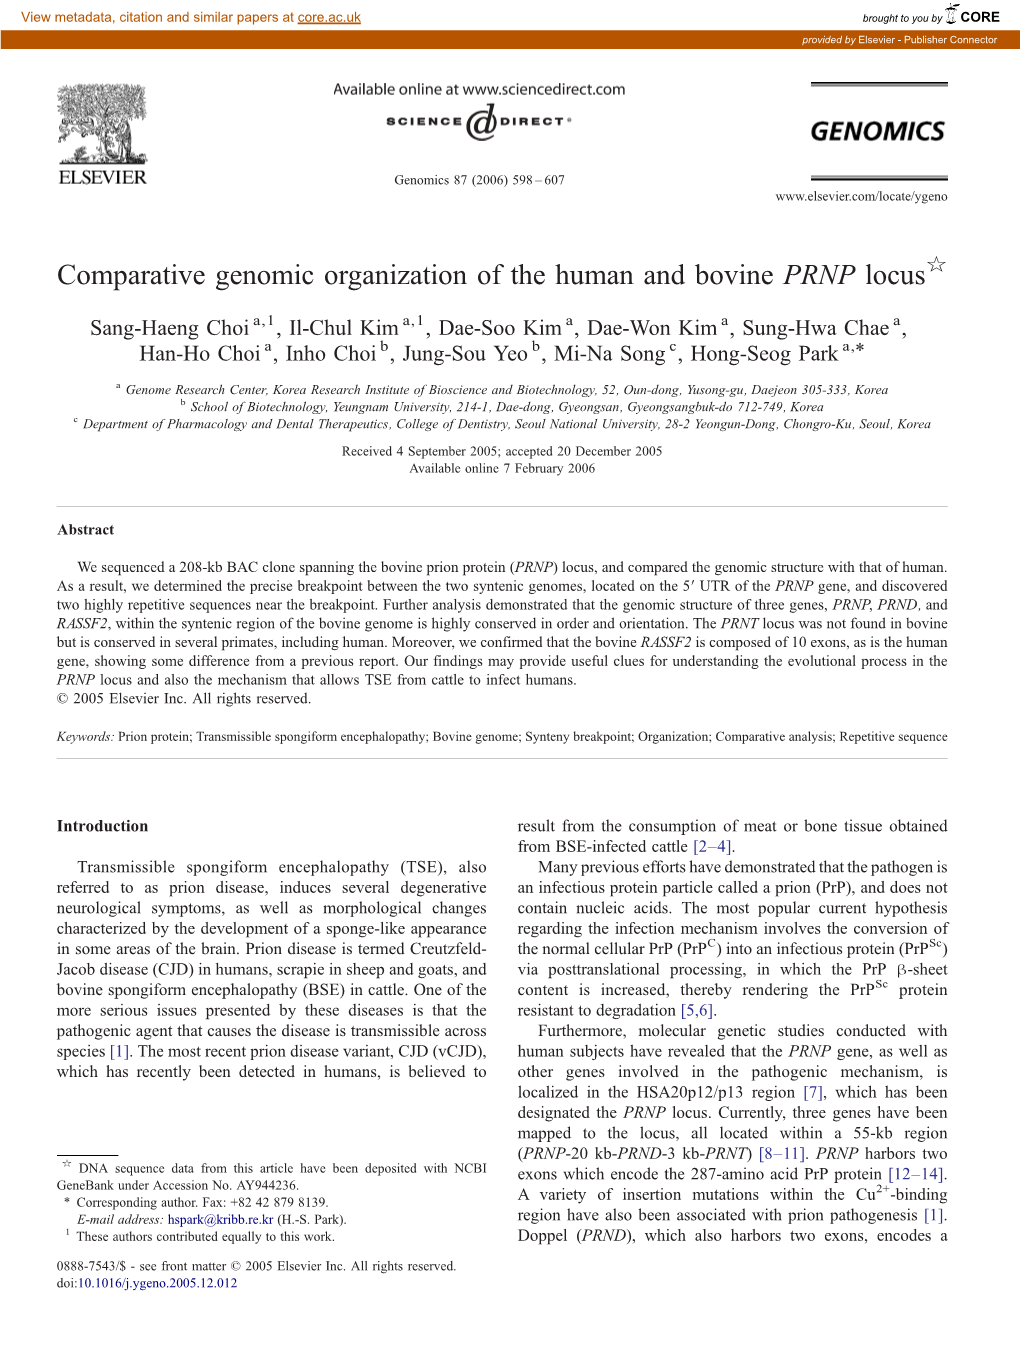 Comparative Genomic Organization of the Human and Bovine PRNP Locus☆